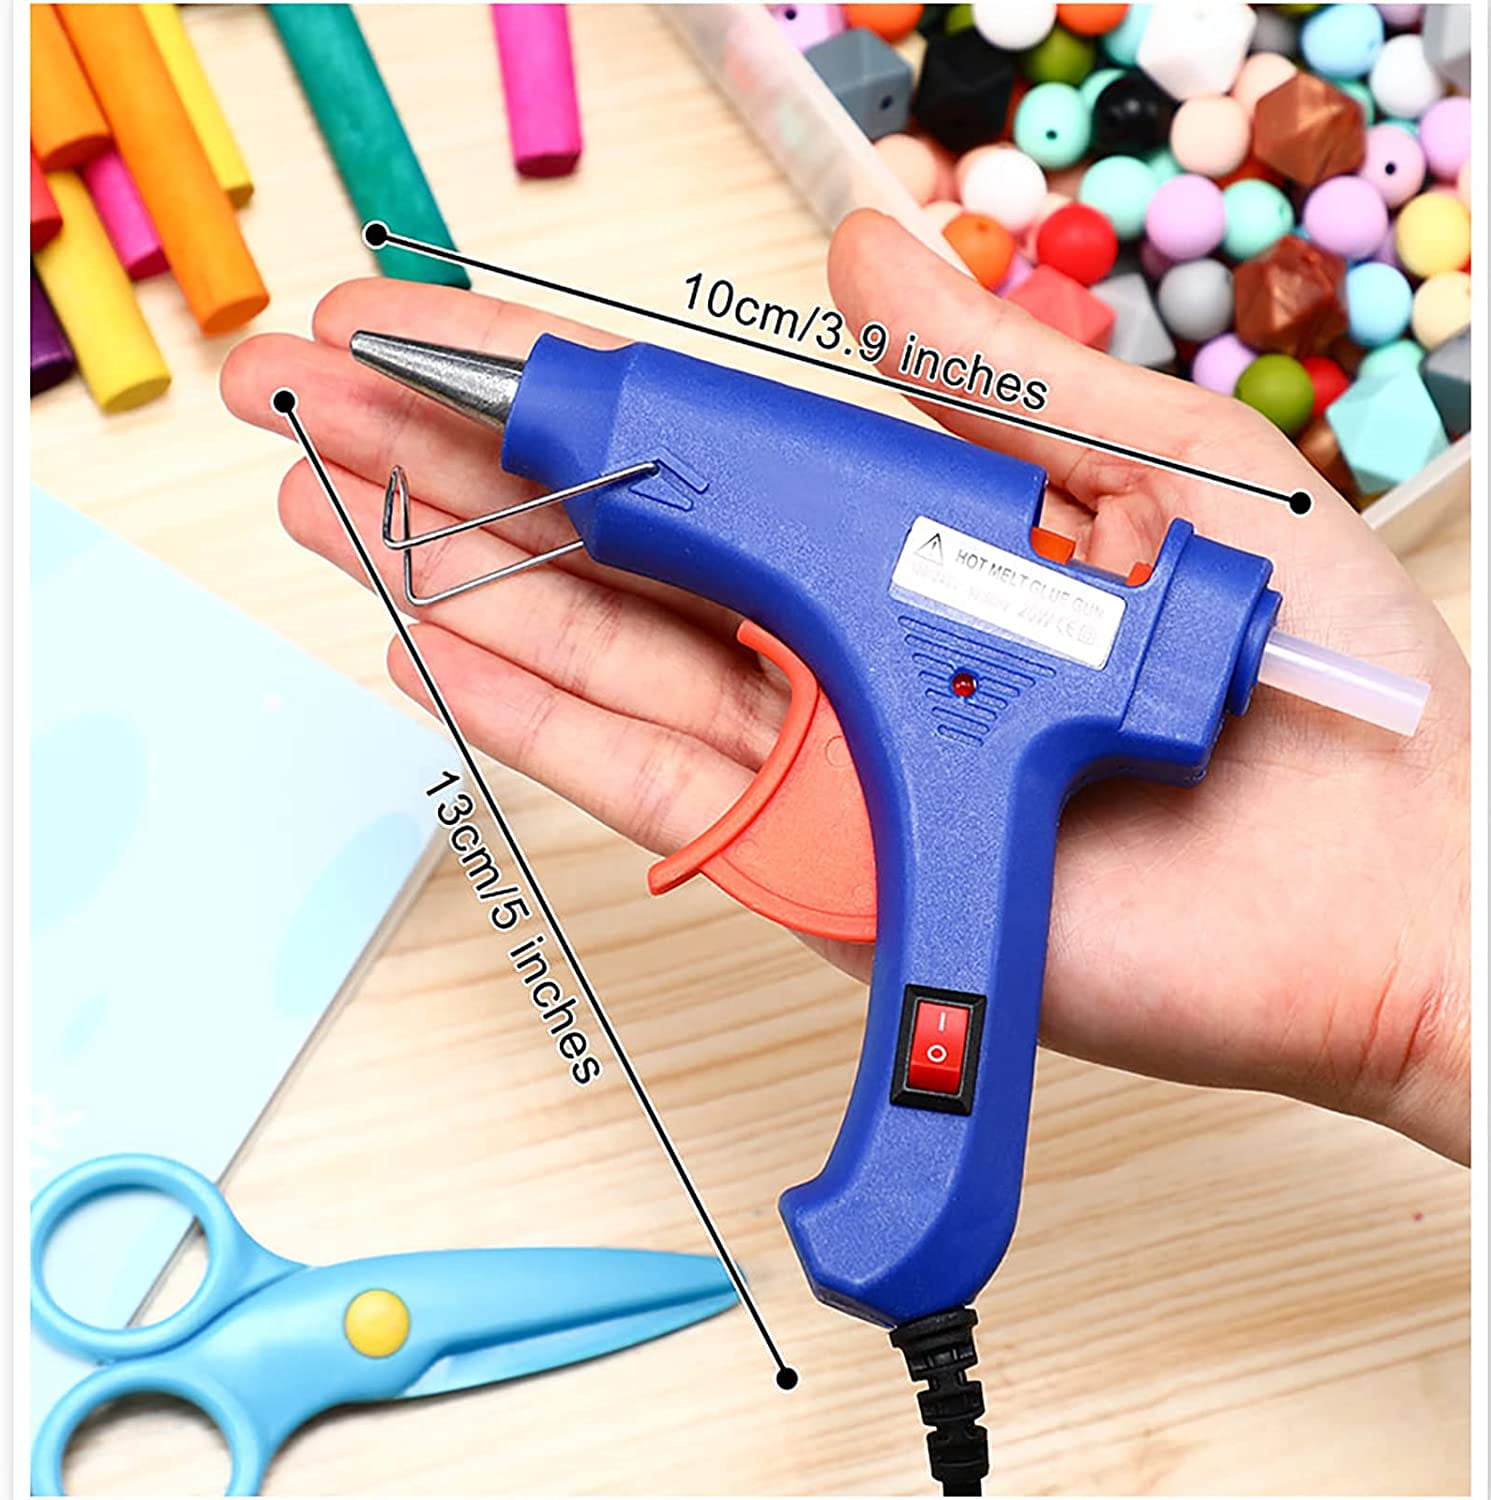  Neitsi Hot Glue Gun,Mini Hot Glue Gun Kit with 12pcs Glue  Sticks for School Crafts DIY Arts Projects,20W Glue Gun and Sticks Set for  Quick Home Repairs : Arts, Crafts 